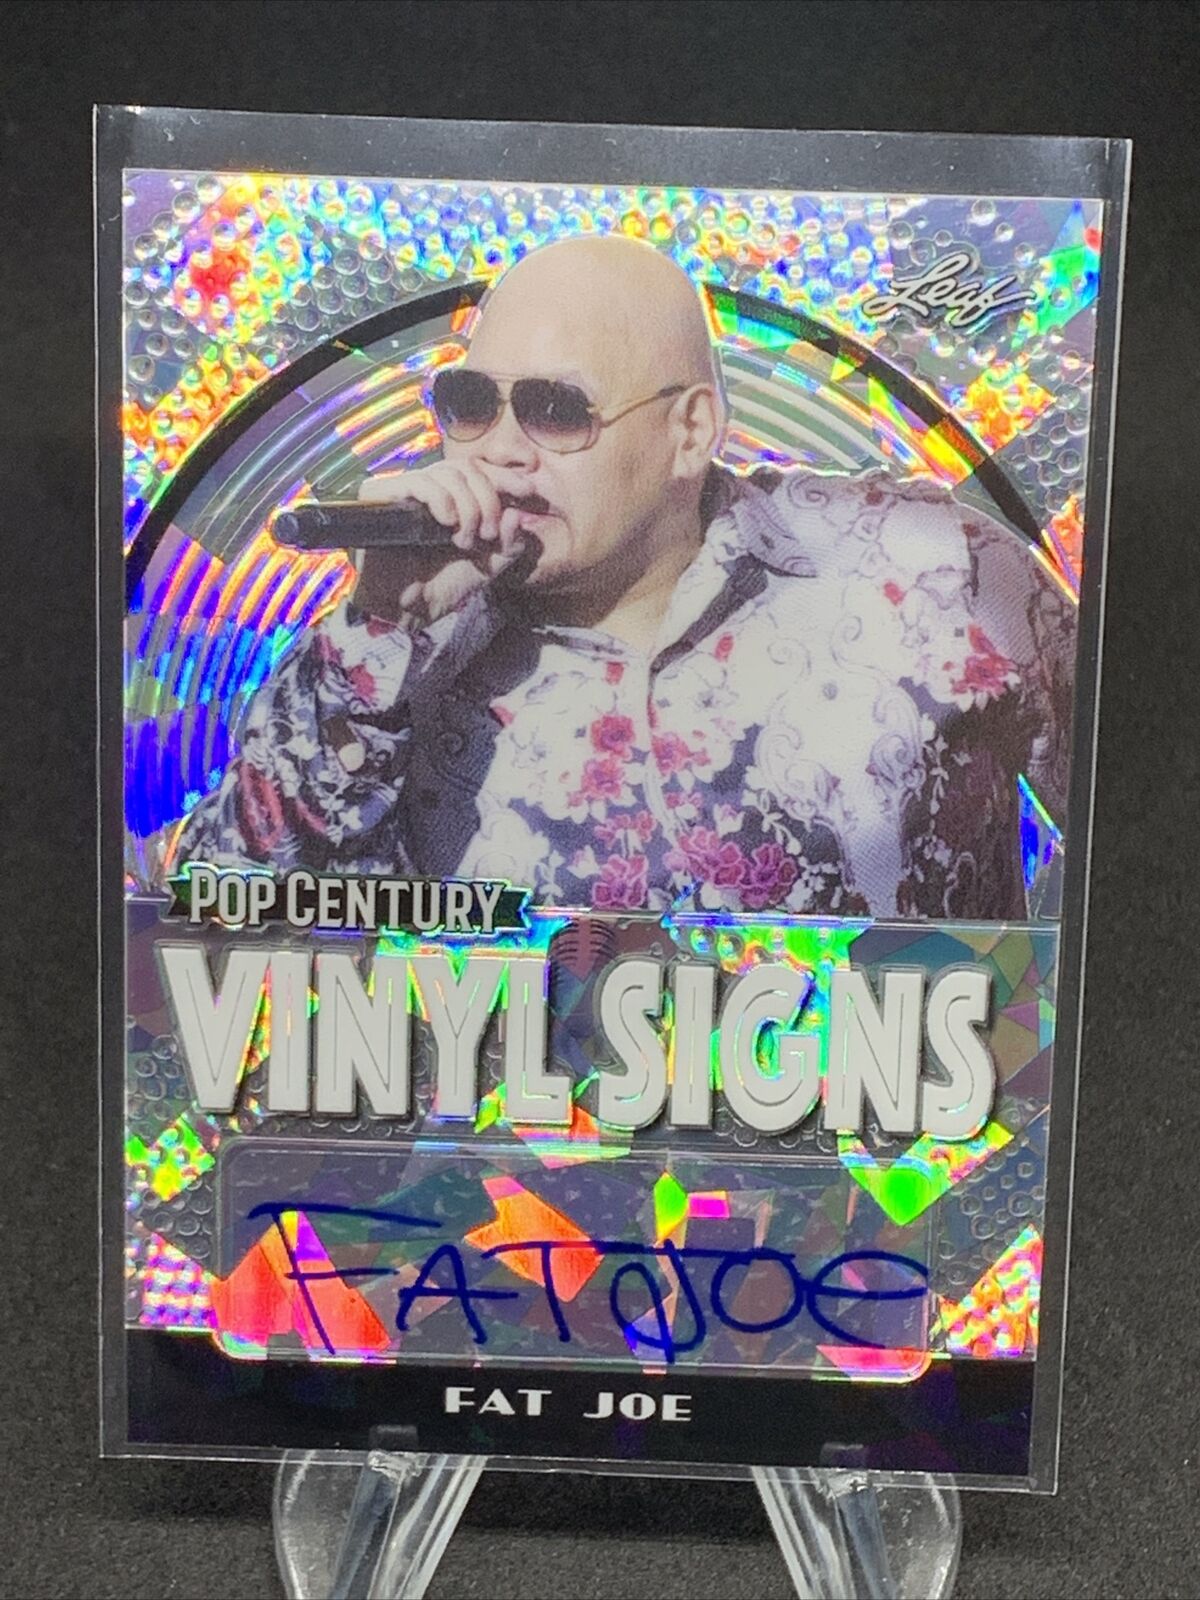 2020 Pop Century Fat Joe autograph card VS-FJ1 Vinyl Signs version - #7/20 🎧